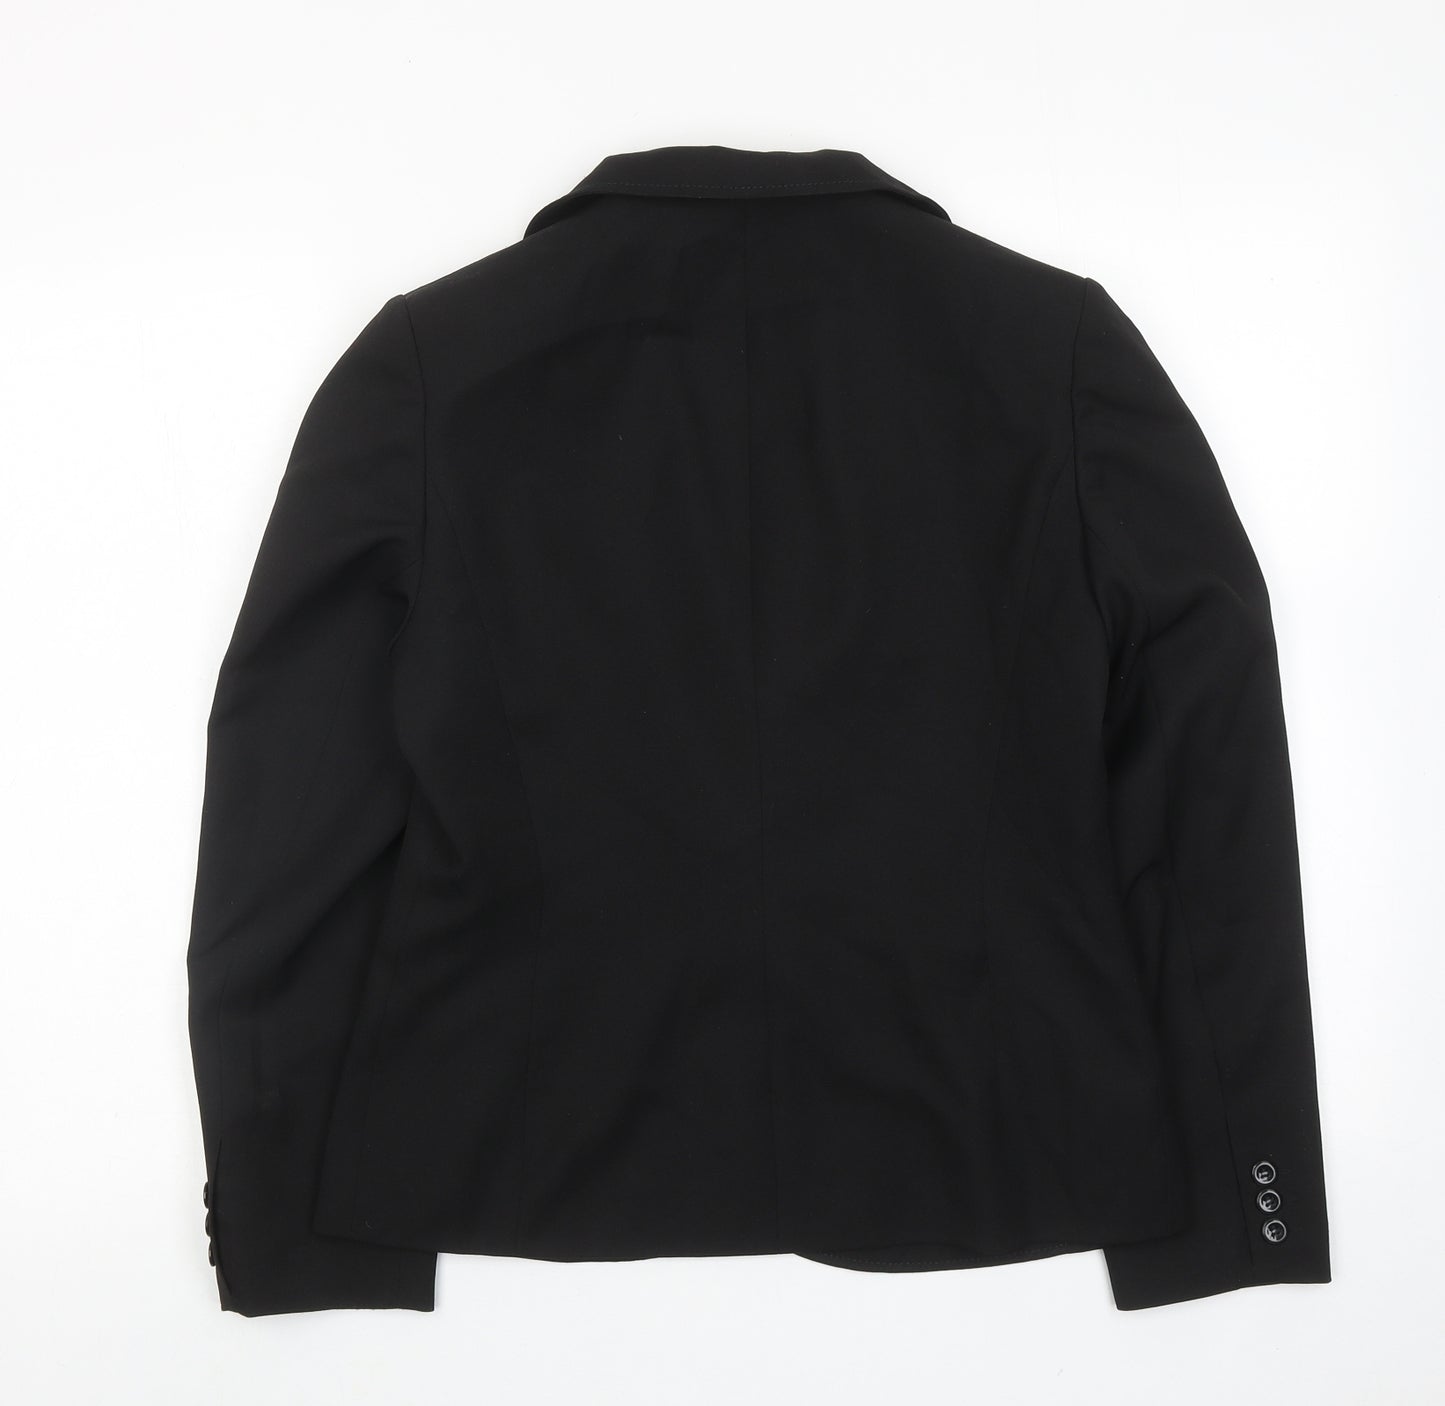 BHS Womens Black Polyester Jacket Suit Jacket Size 12